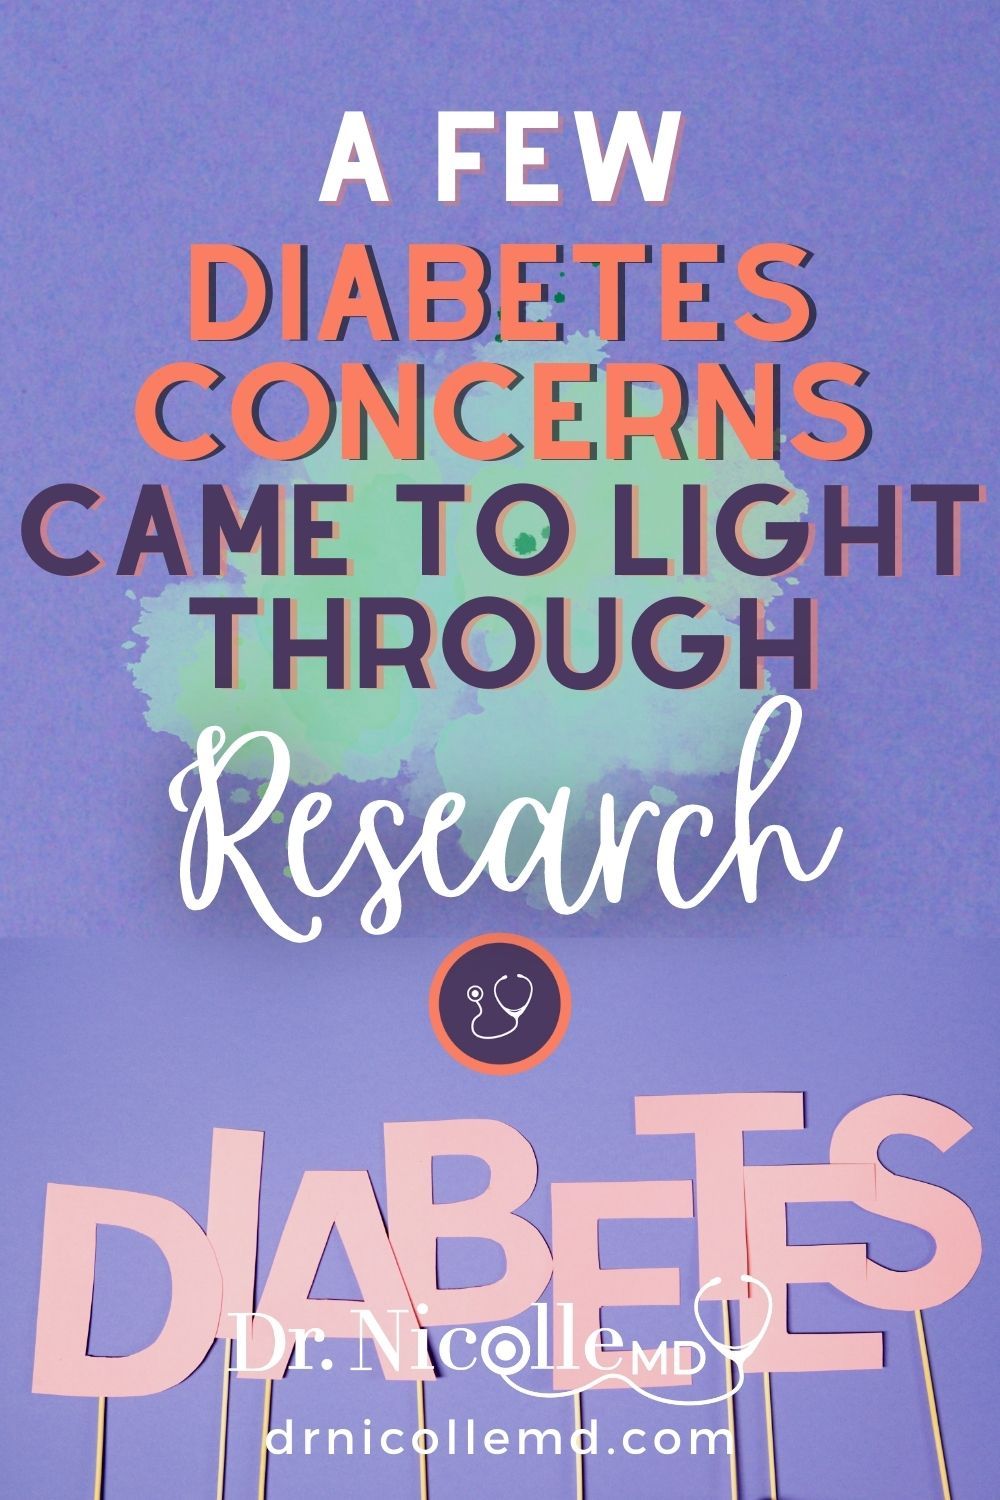 A Few Diabetes Concerns Came to Light Through Research